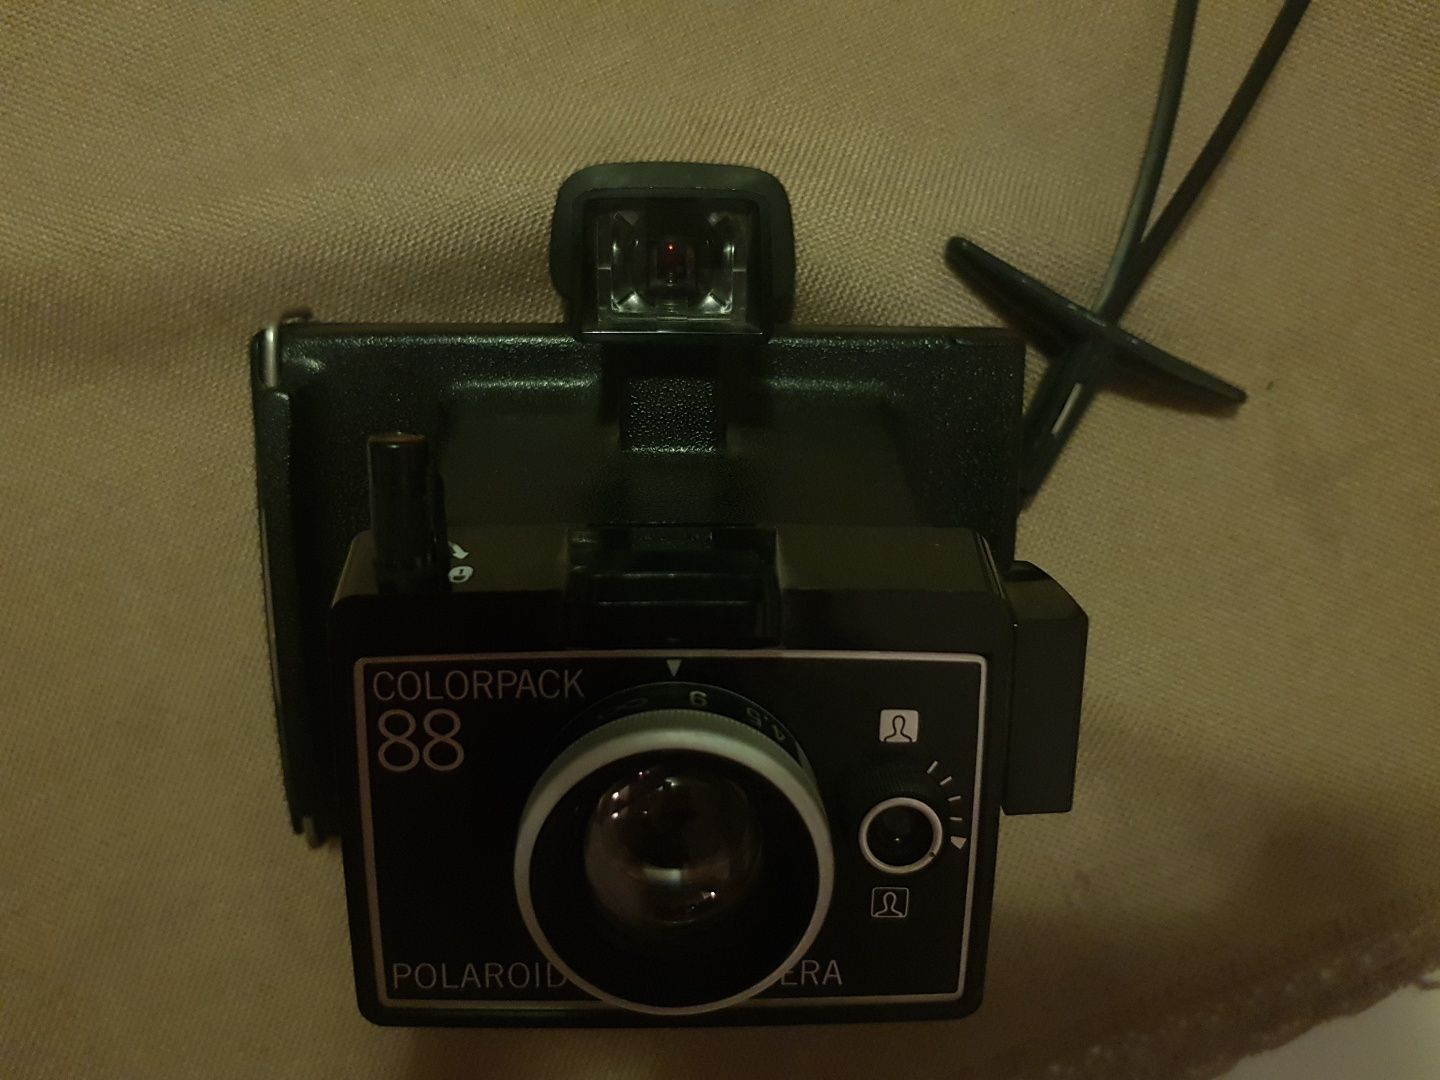 Polaroid Colorpack 88 Land camera, idealny stan